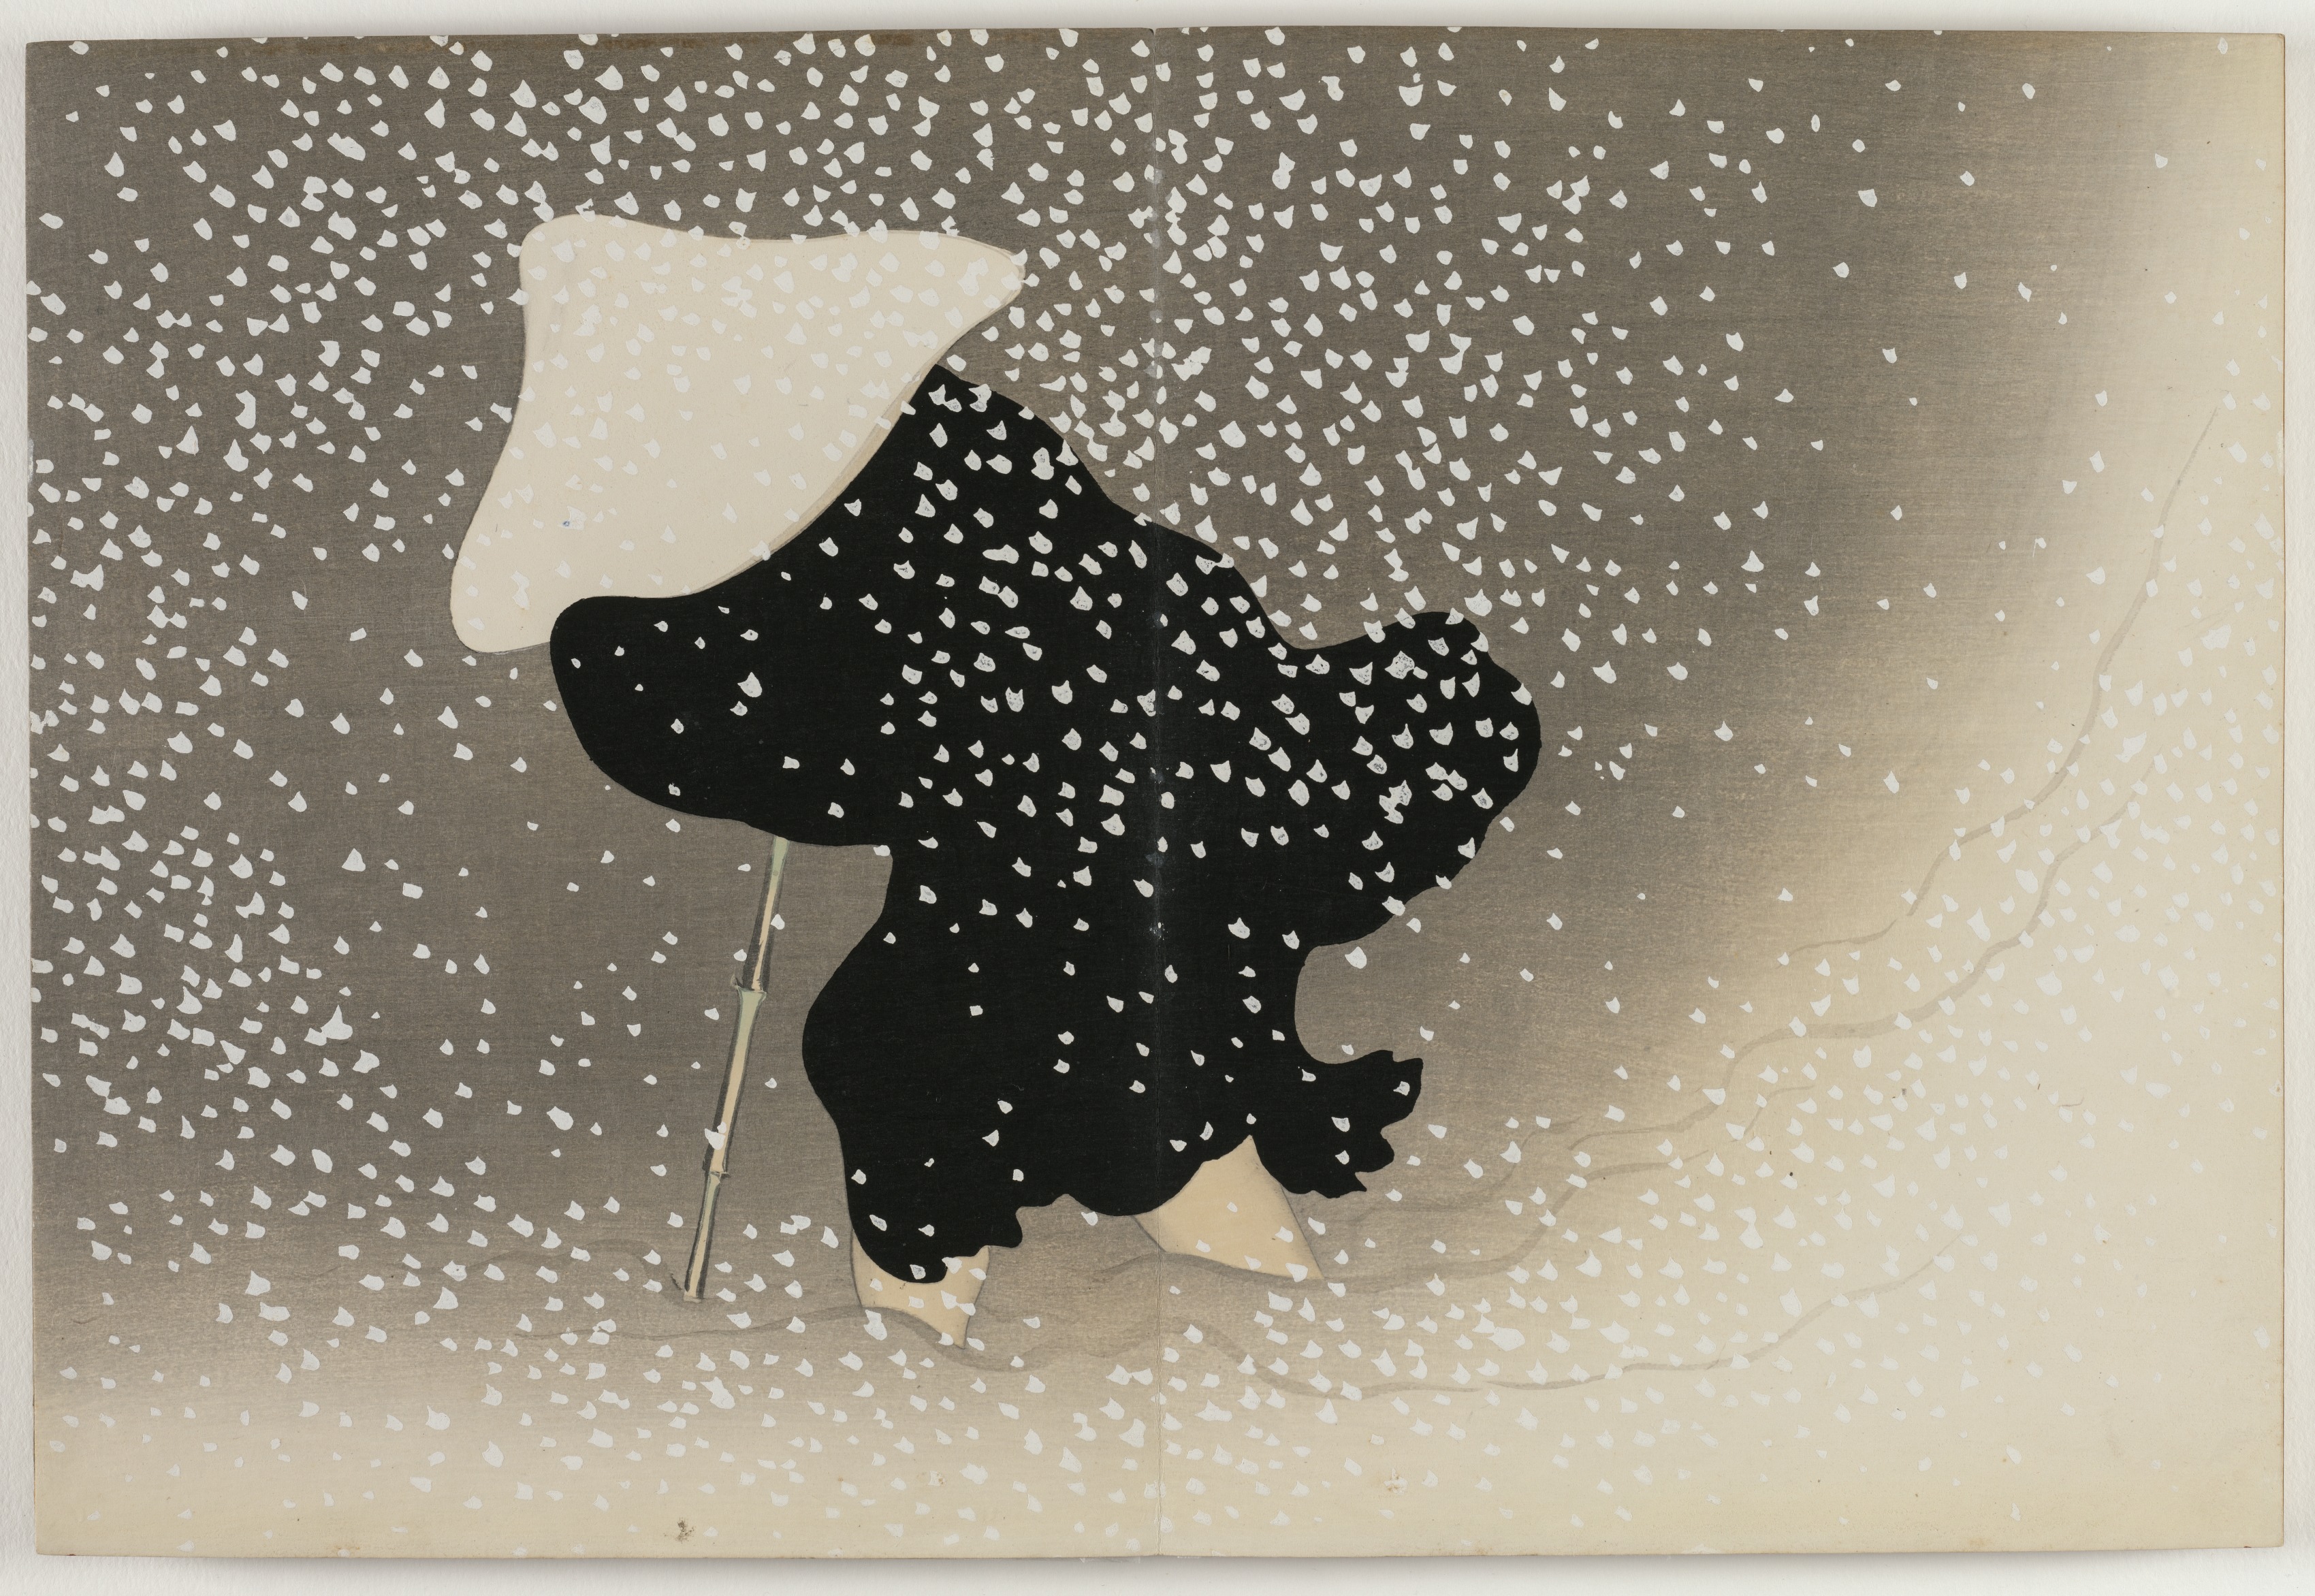 Цветы тысячи миров: Снежный вихрь (Flowers of a Hundred Worlds: Swirling Snow) by Kamisaka Sekka - 1909-10 - 29.9 x 22.1 см 